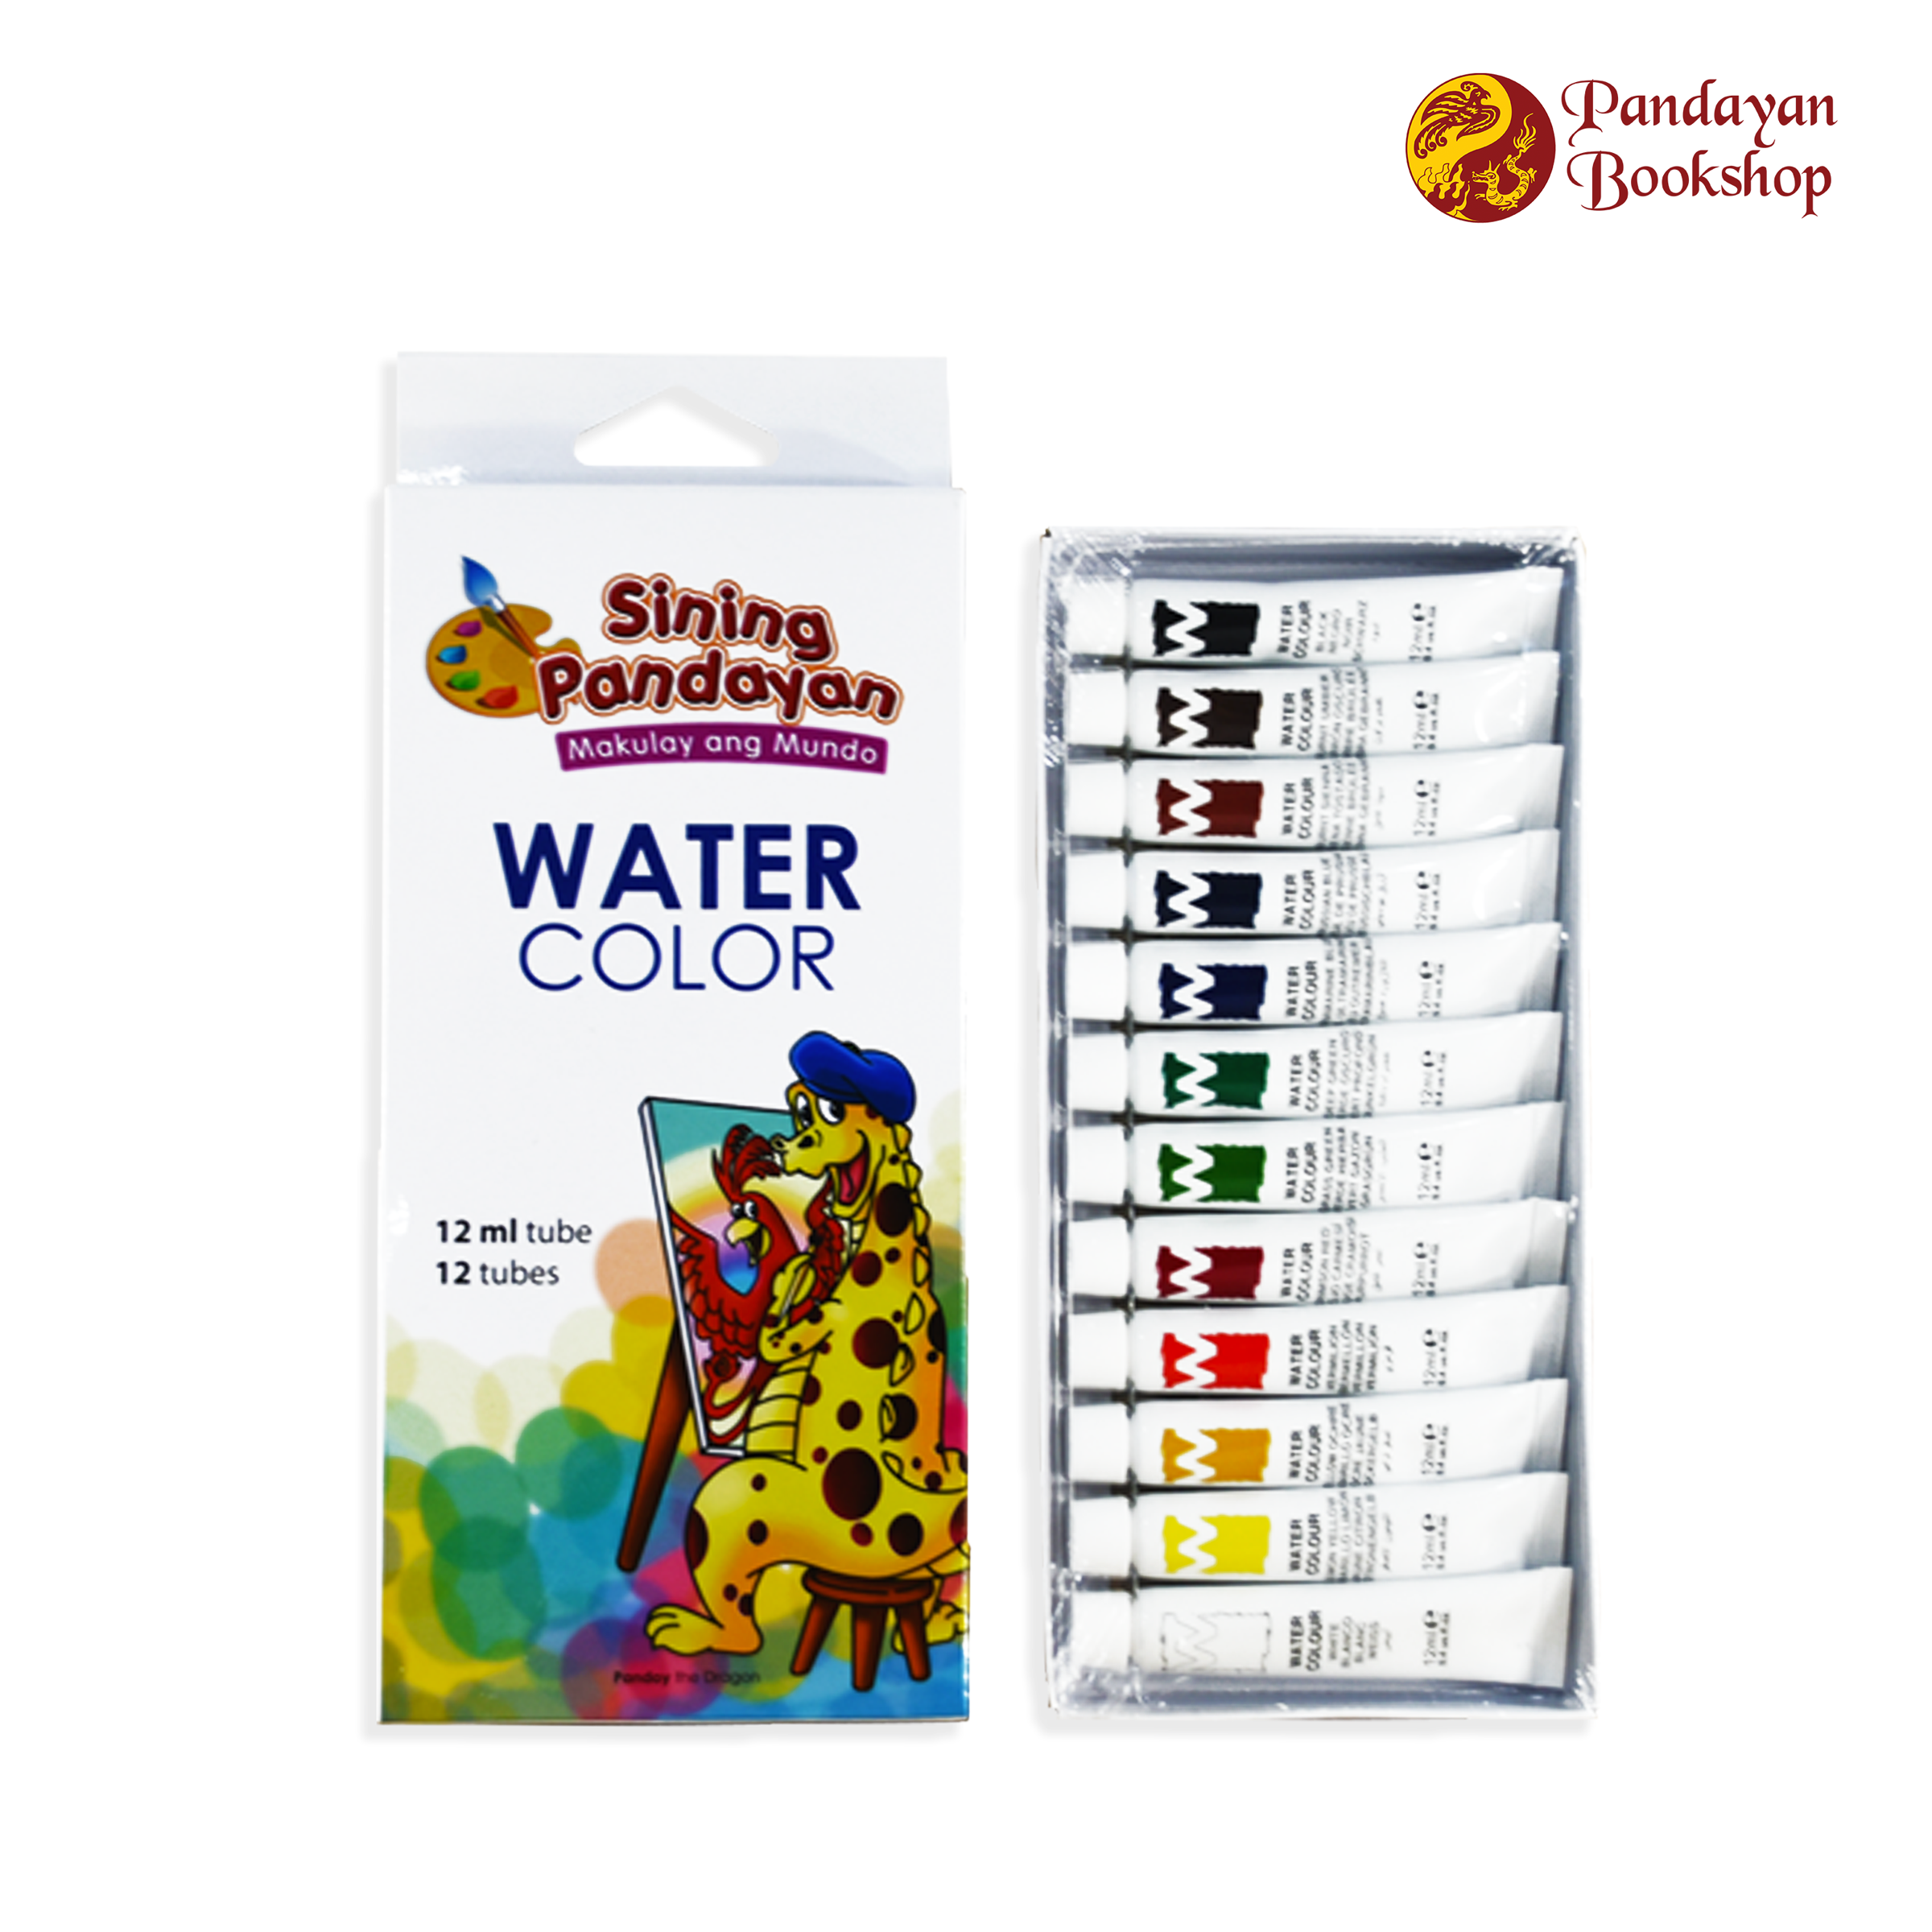 Sining Pandayan Water Color 12s